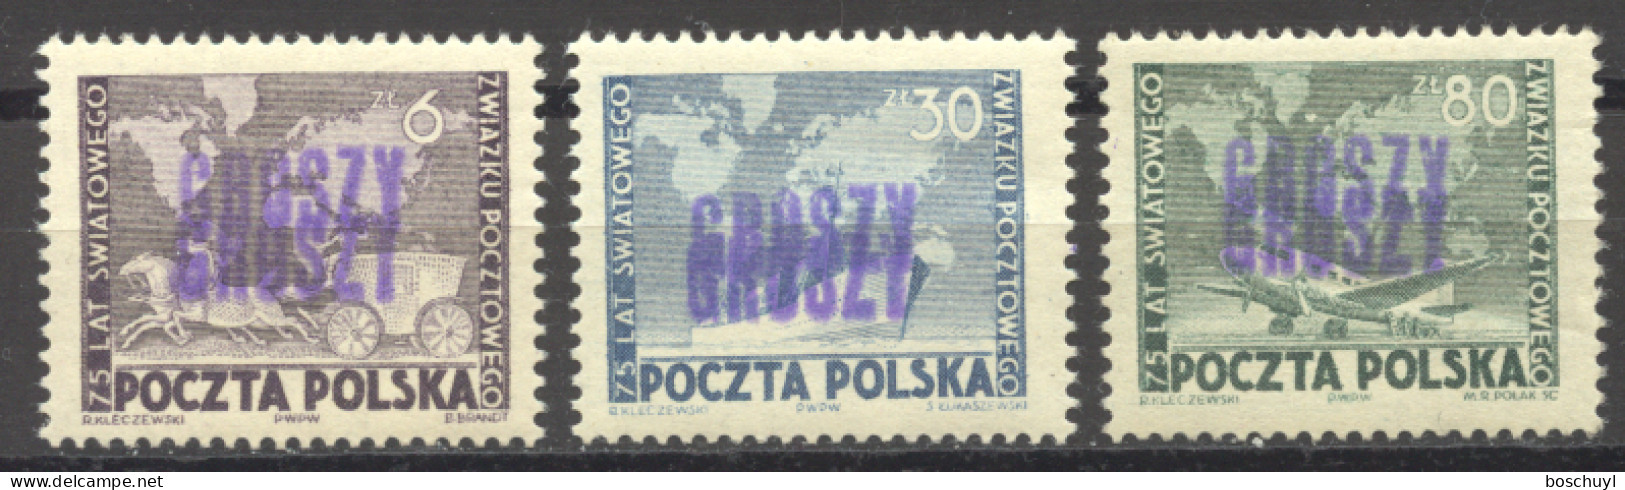 Poland, 1950, UPU, Universal Postal Union, United Nations, Groszy Overprint, MNH, Michel 636-638 - Unused Stamps